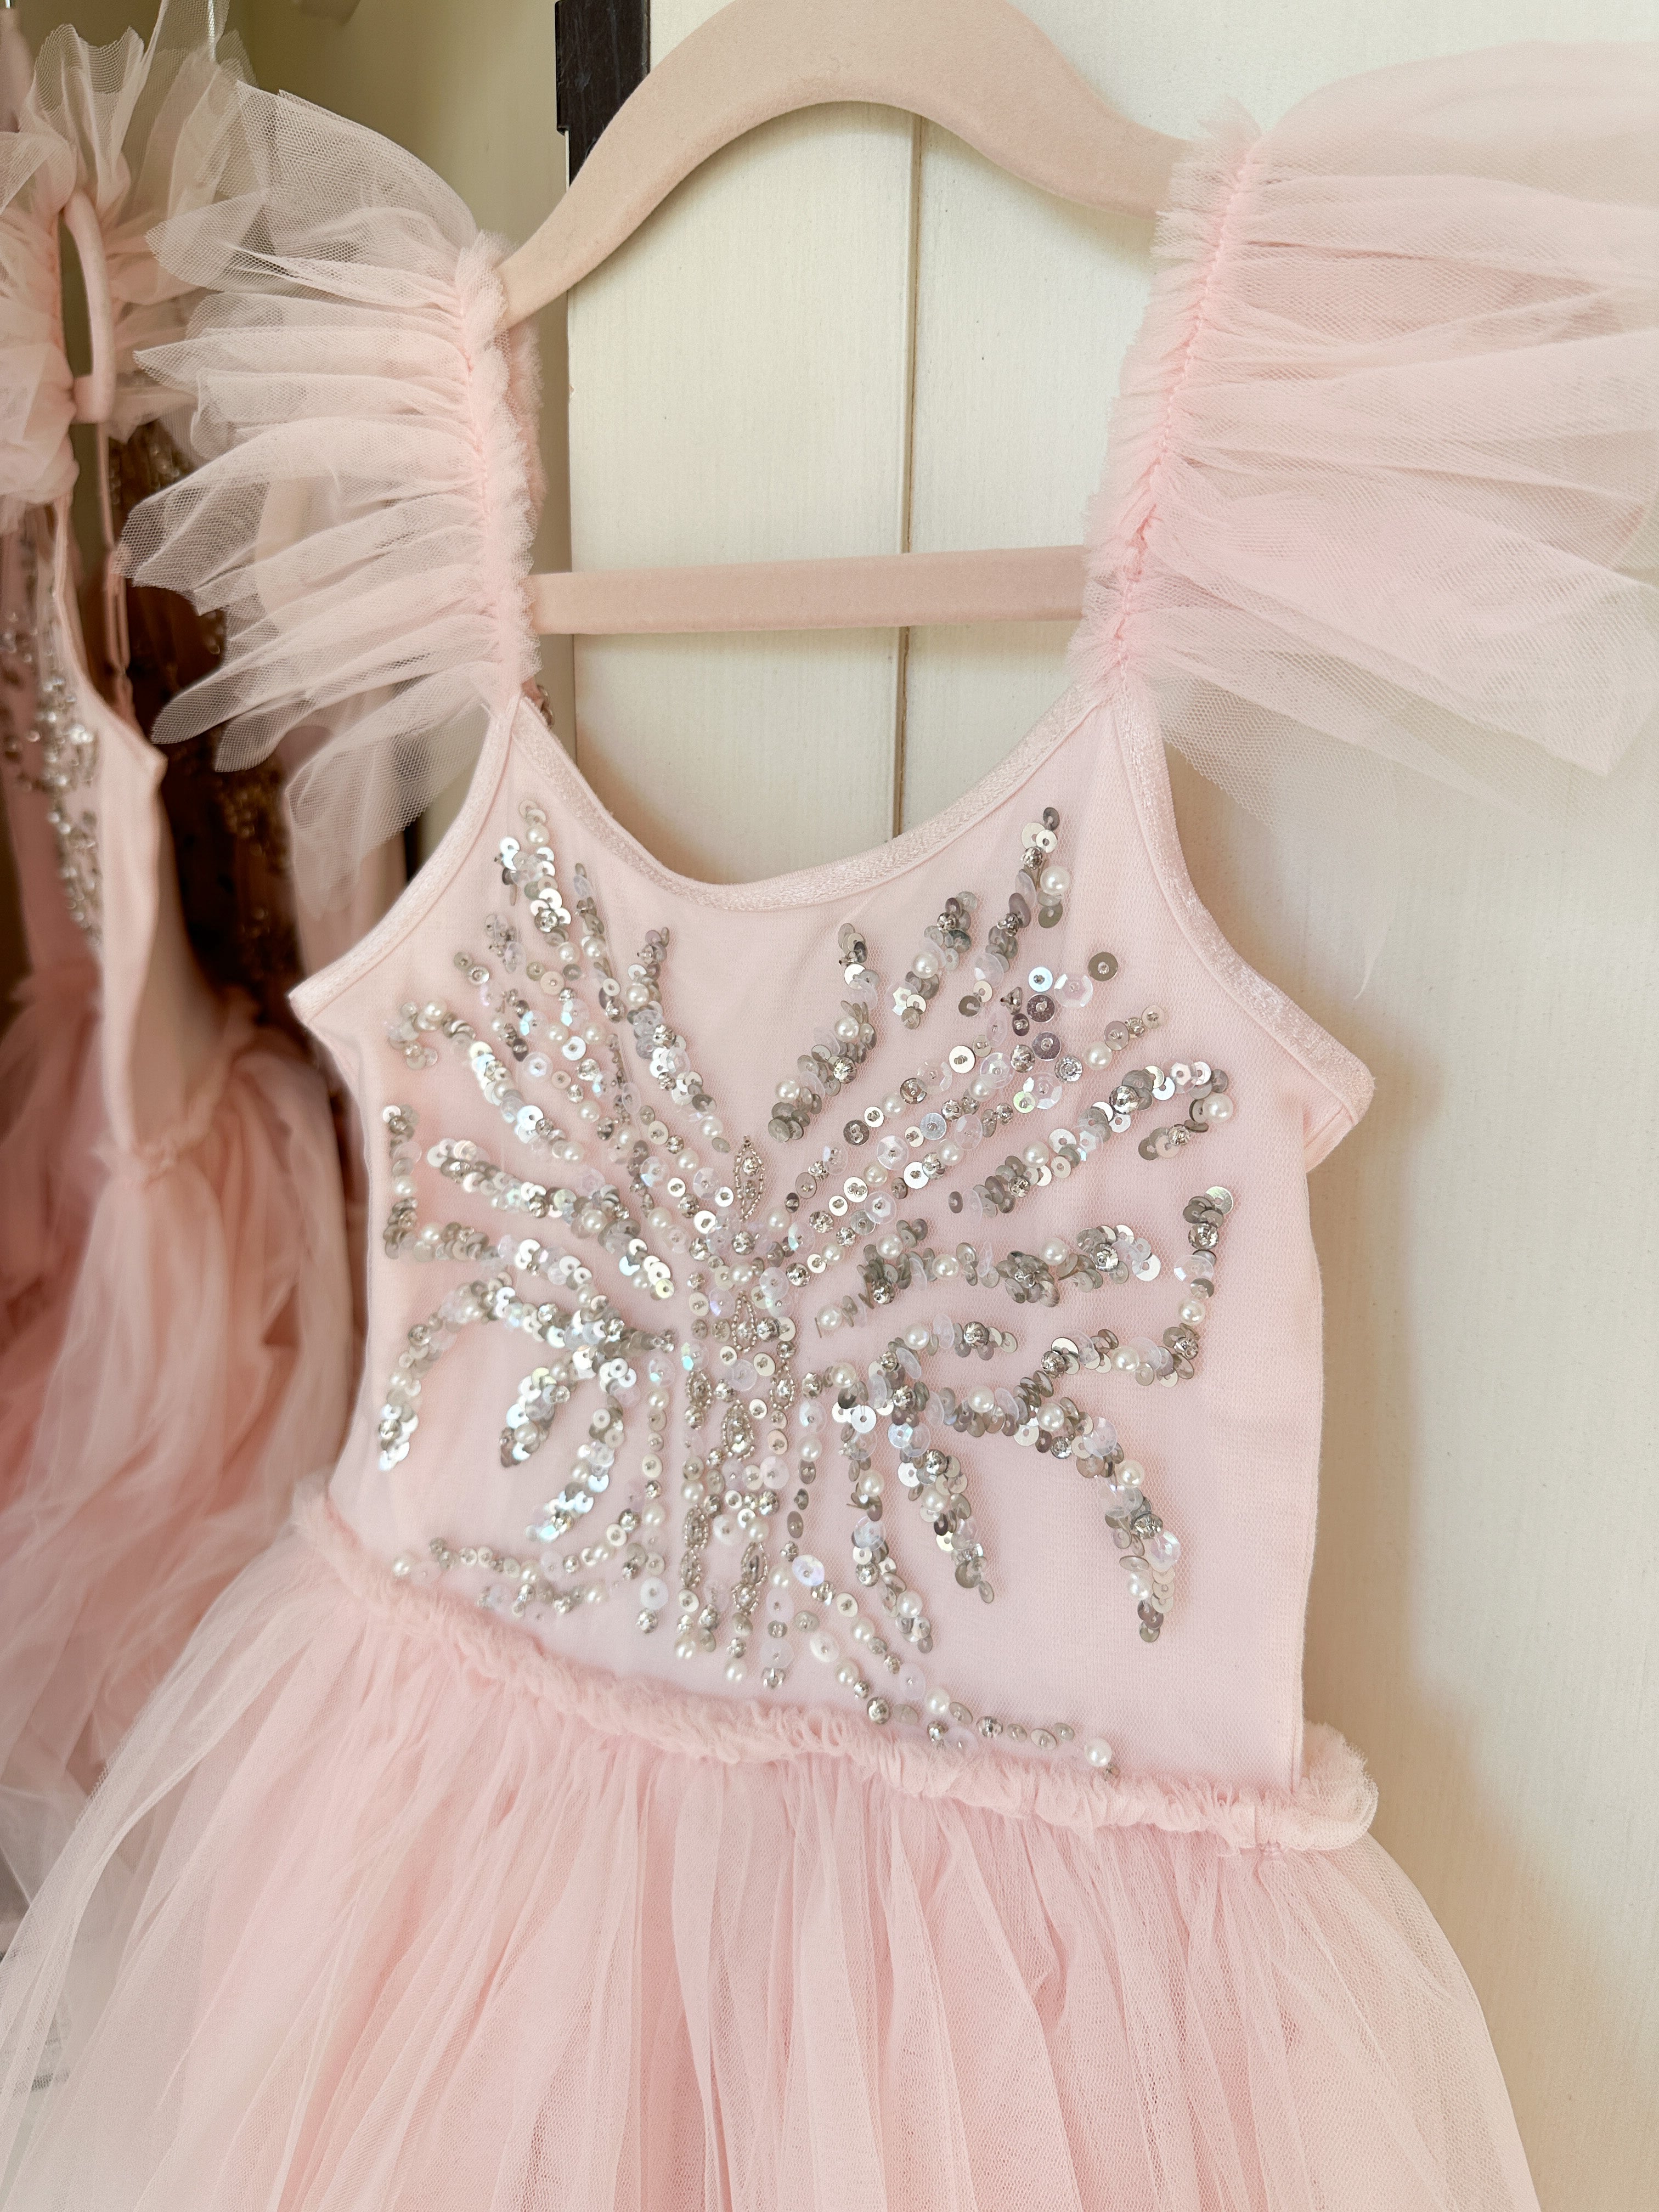 The “Barbie Girl” Blush Pink Tutu Dress